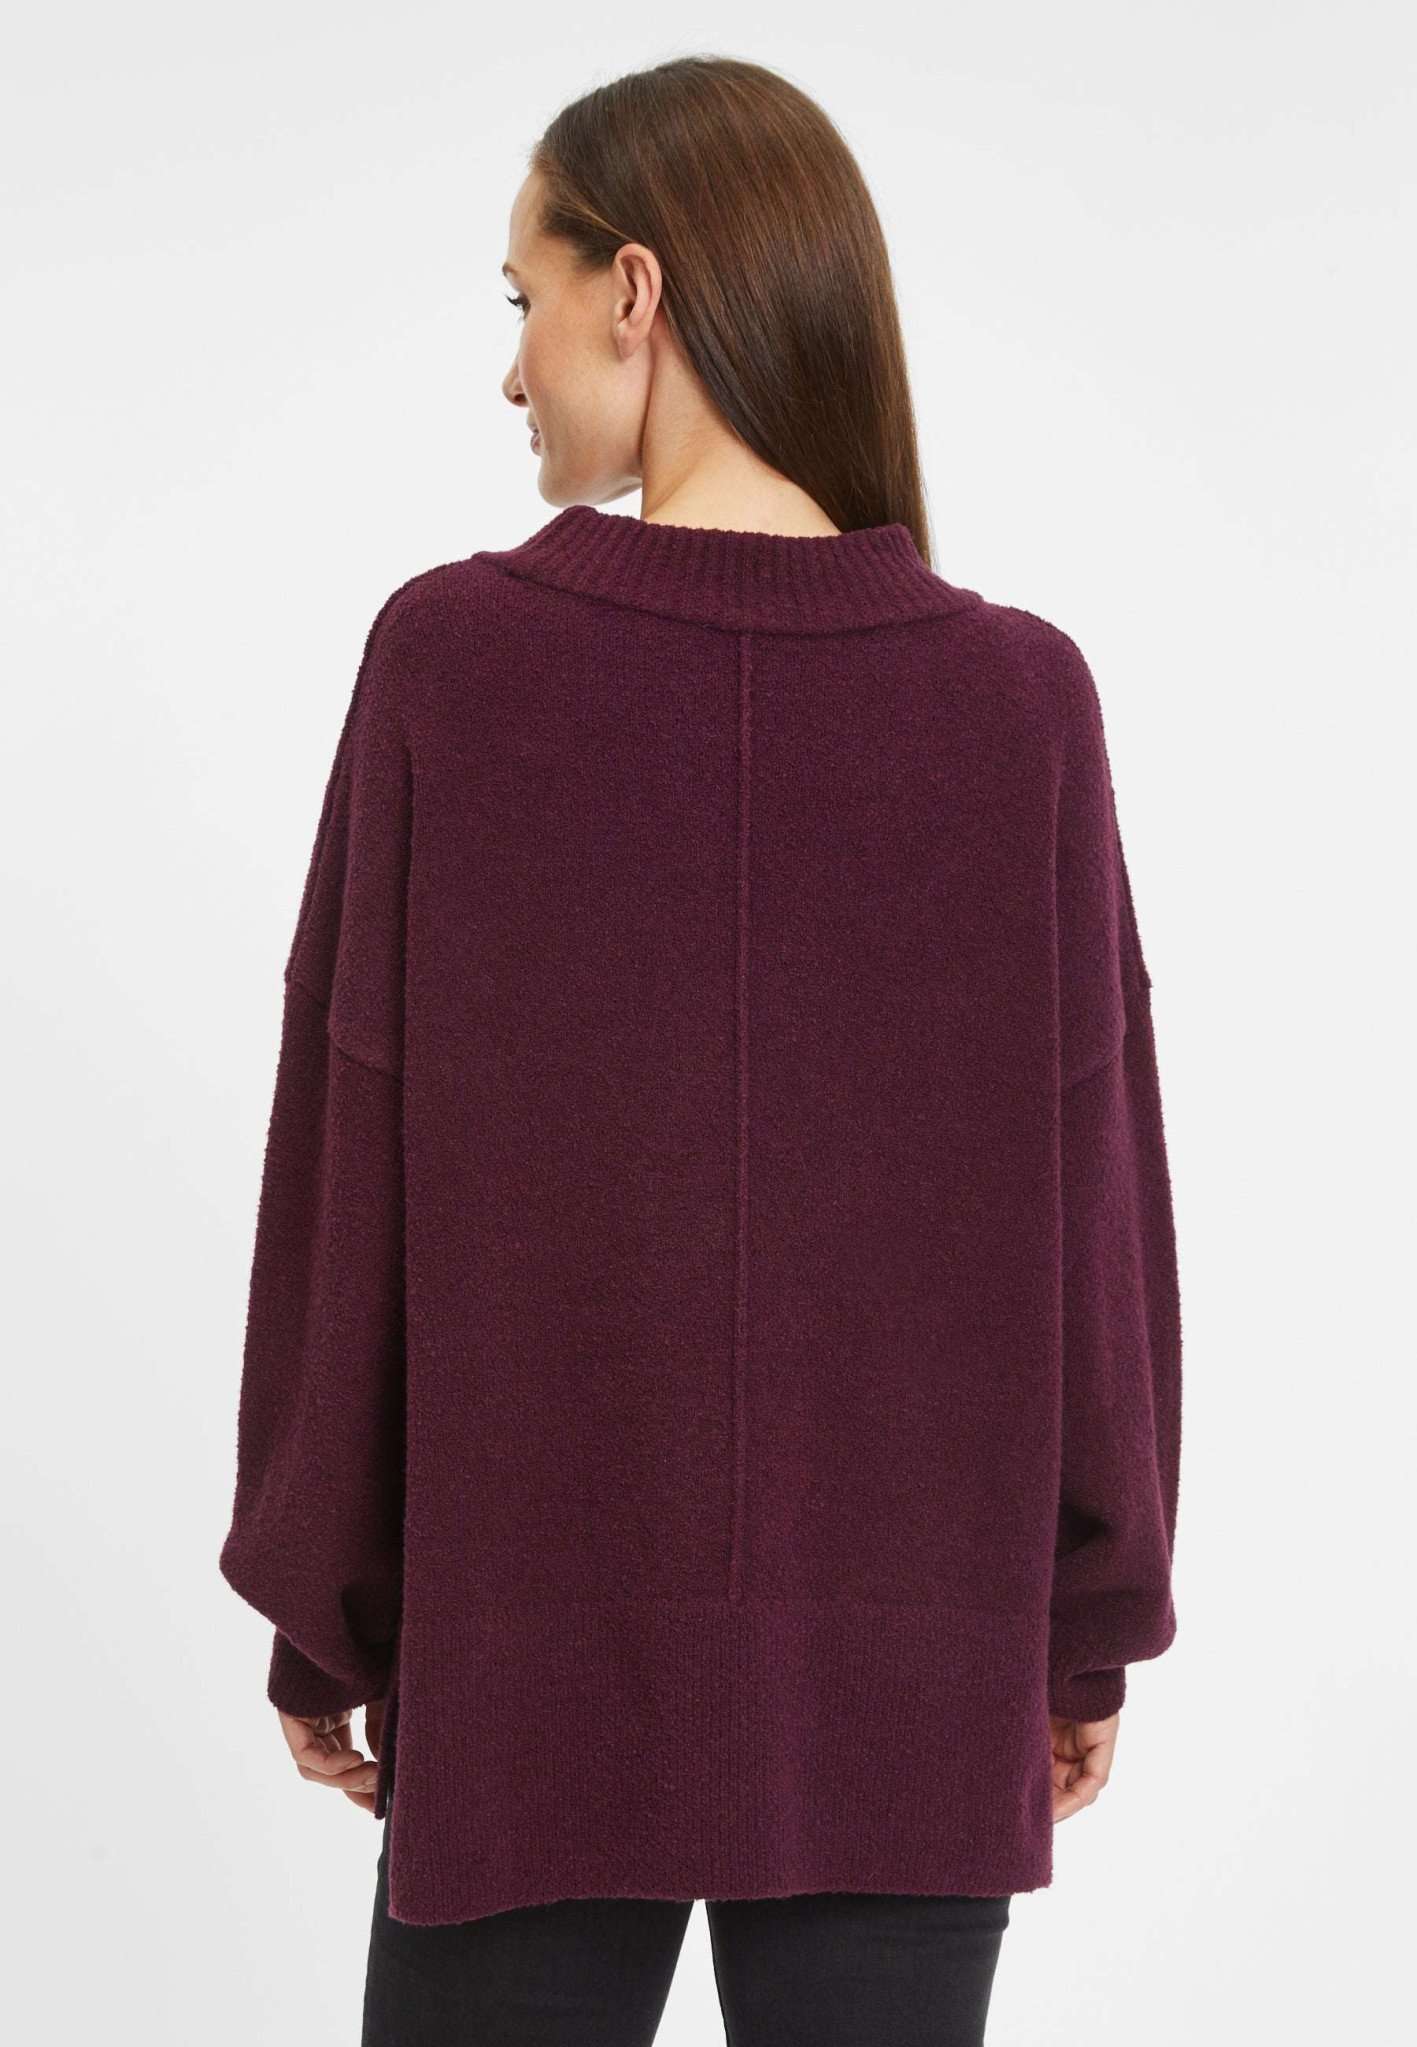 Barlt Boucle Knit Sweater in Grape Wine Pullover Tamaris   